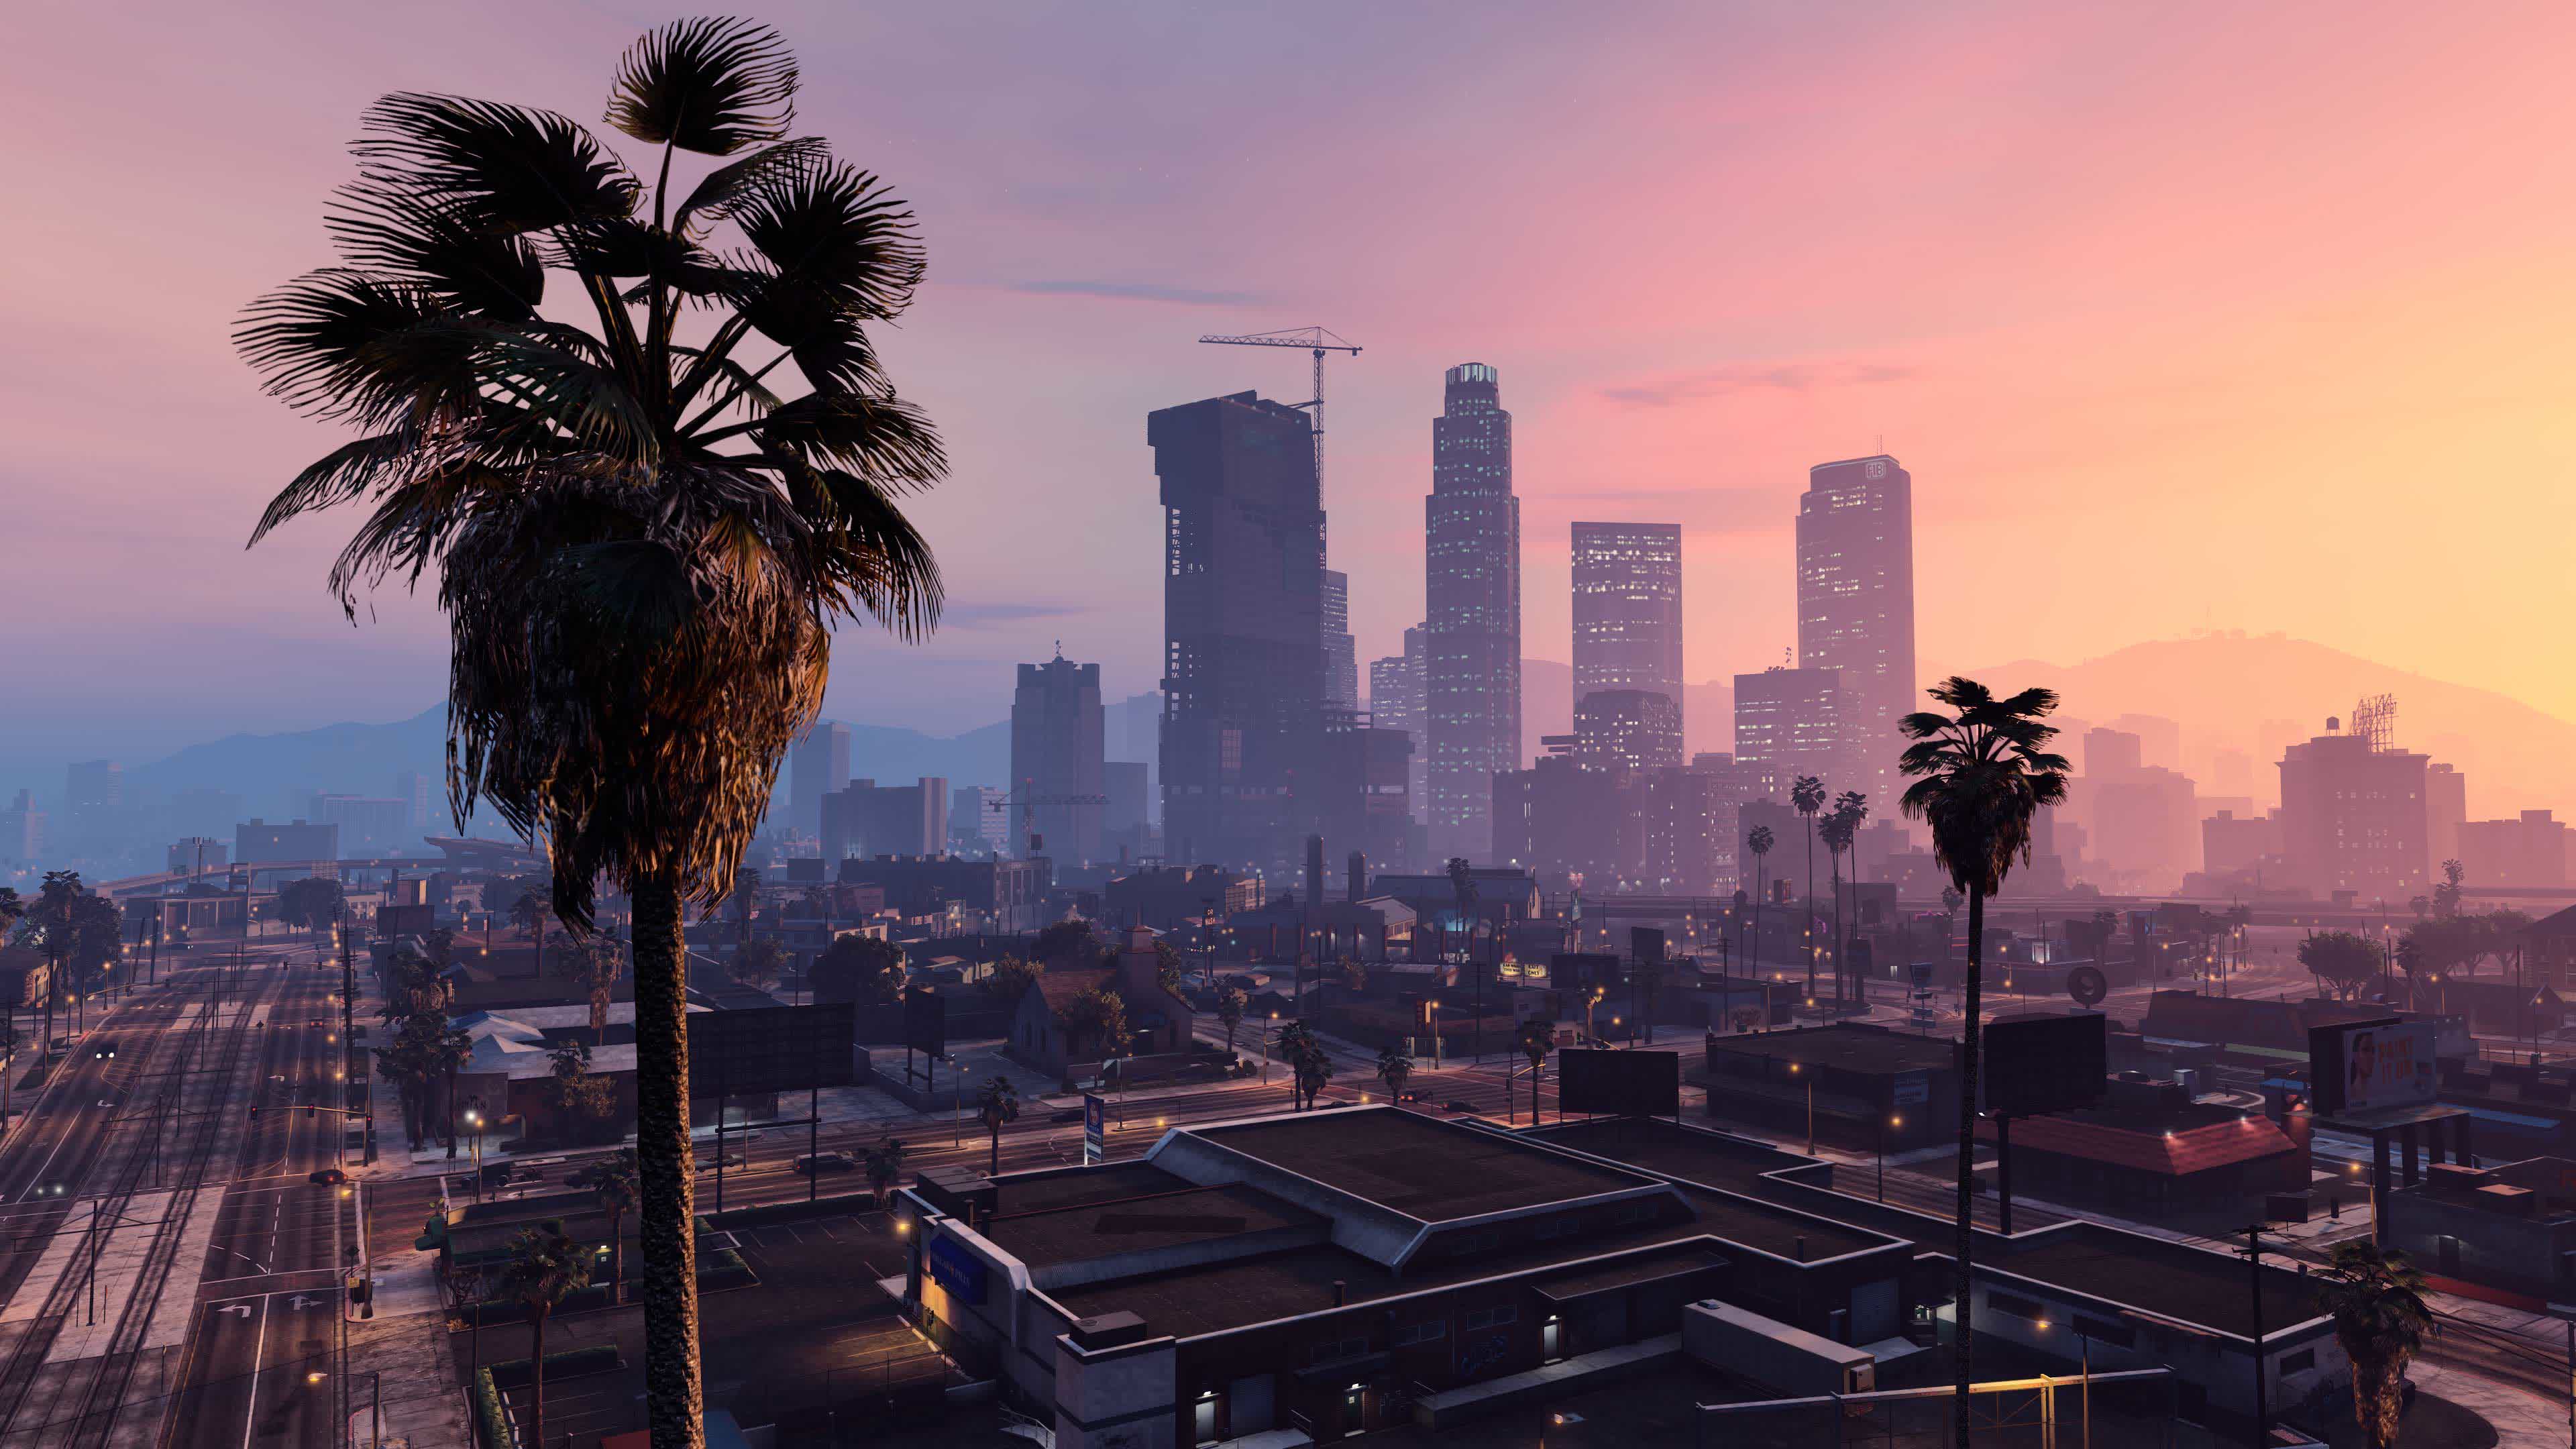 Rockstar confirms work on next Grand Theft Auto game is 'well underway'